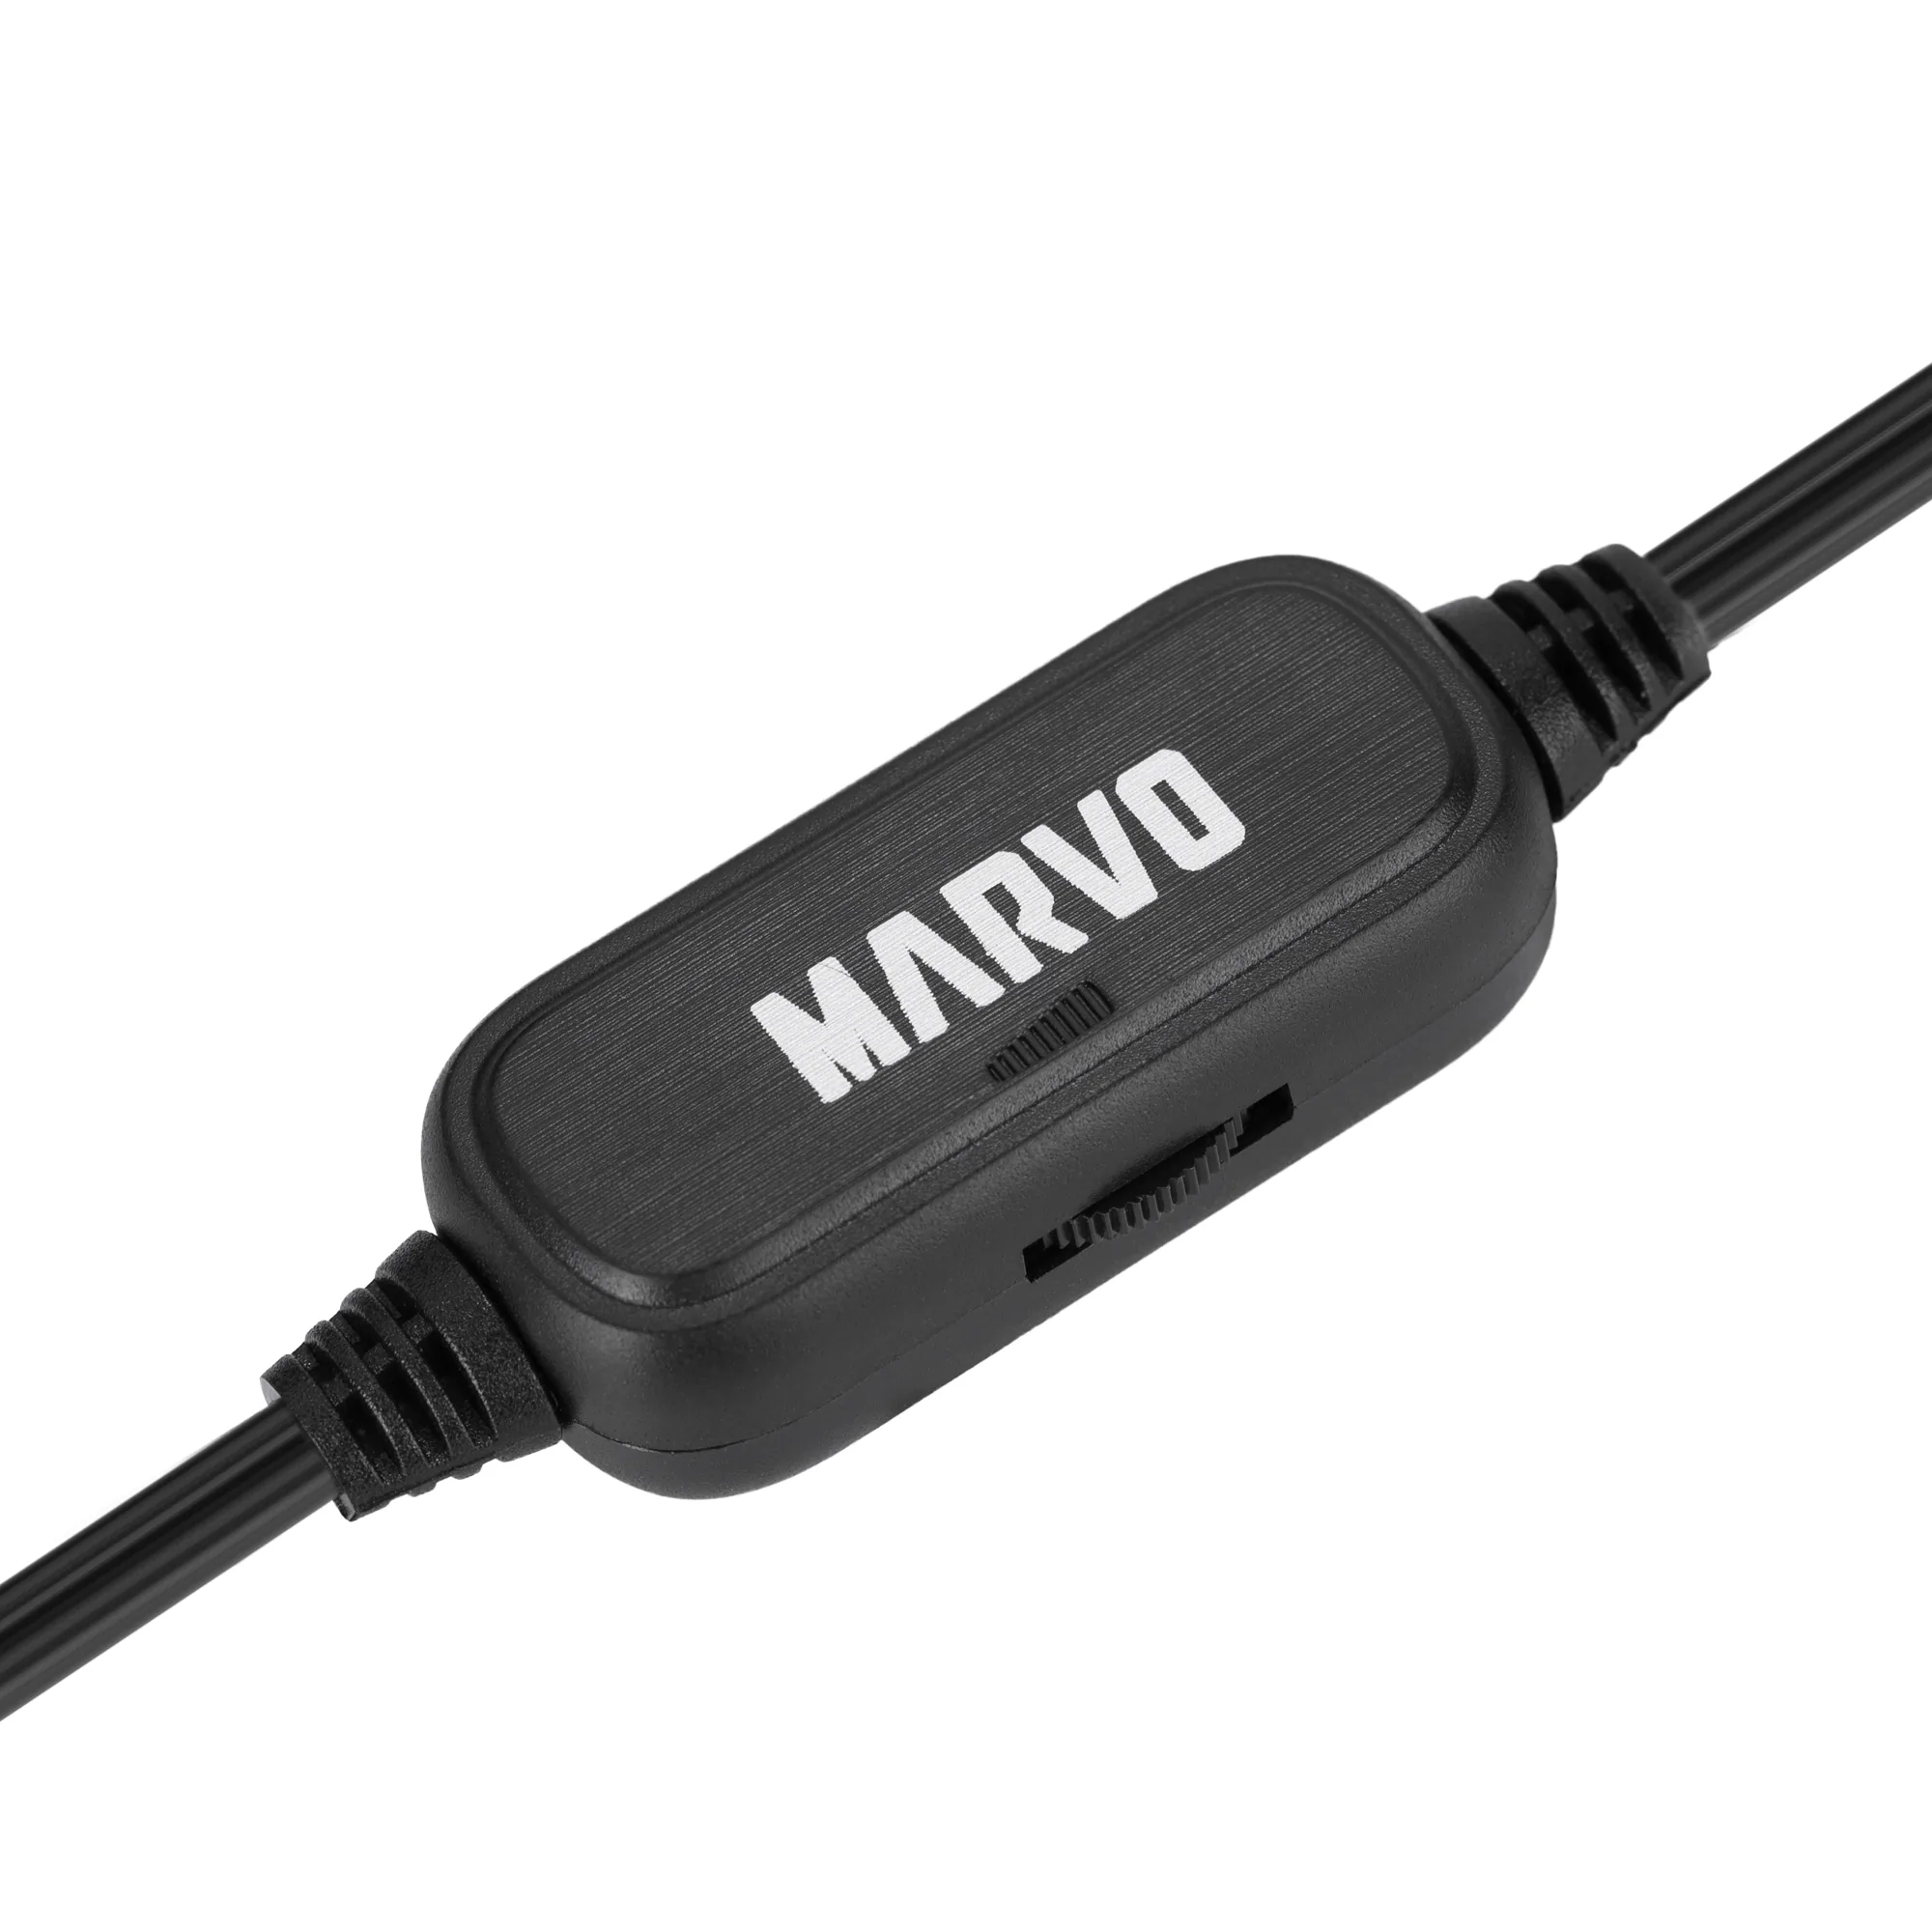 Marvo Gaming Headphones, 6 Watt, 2 Pieces, RGB Light, Black, SG-118